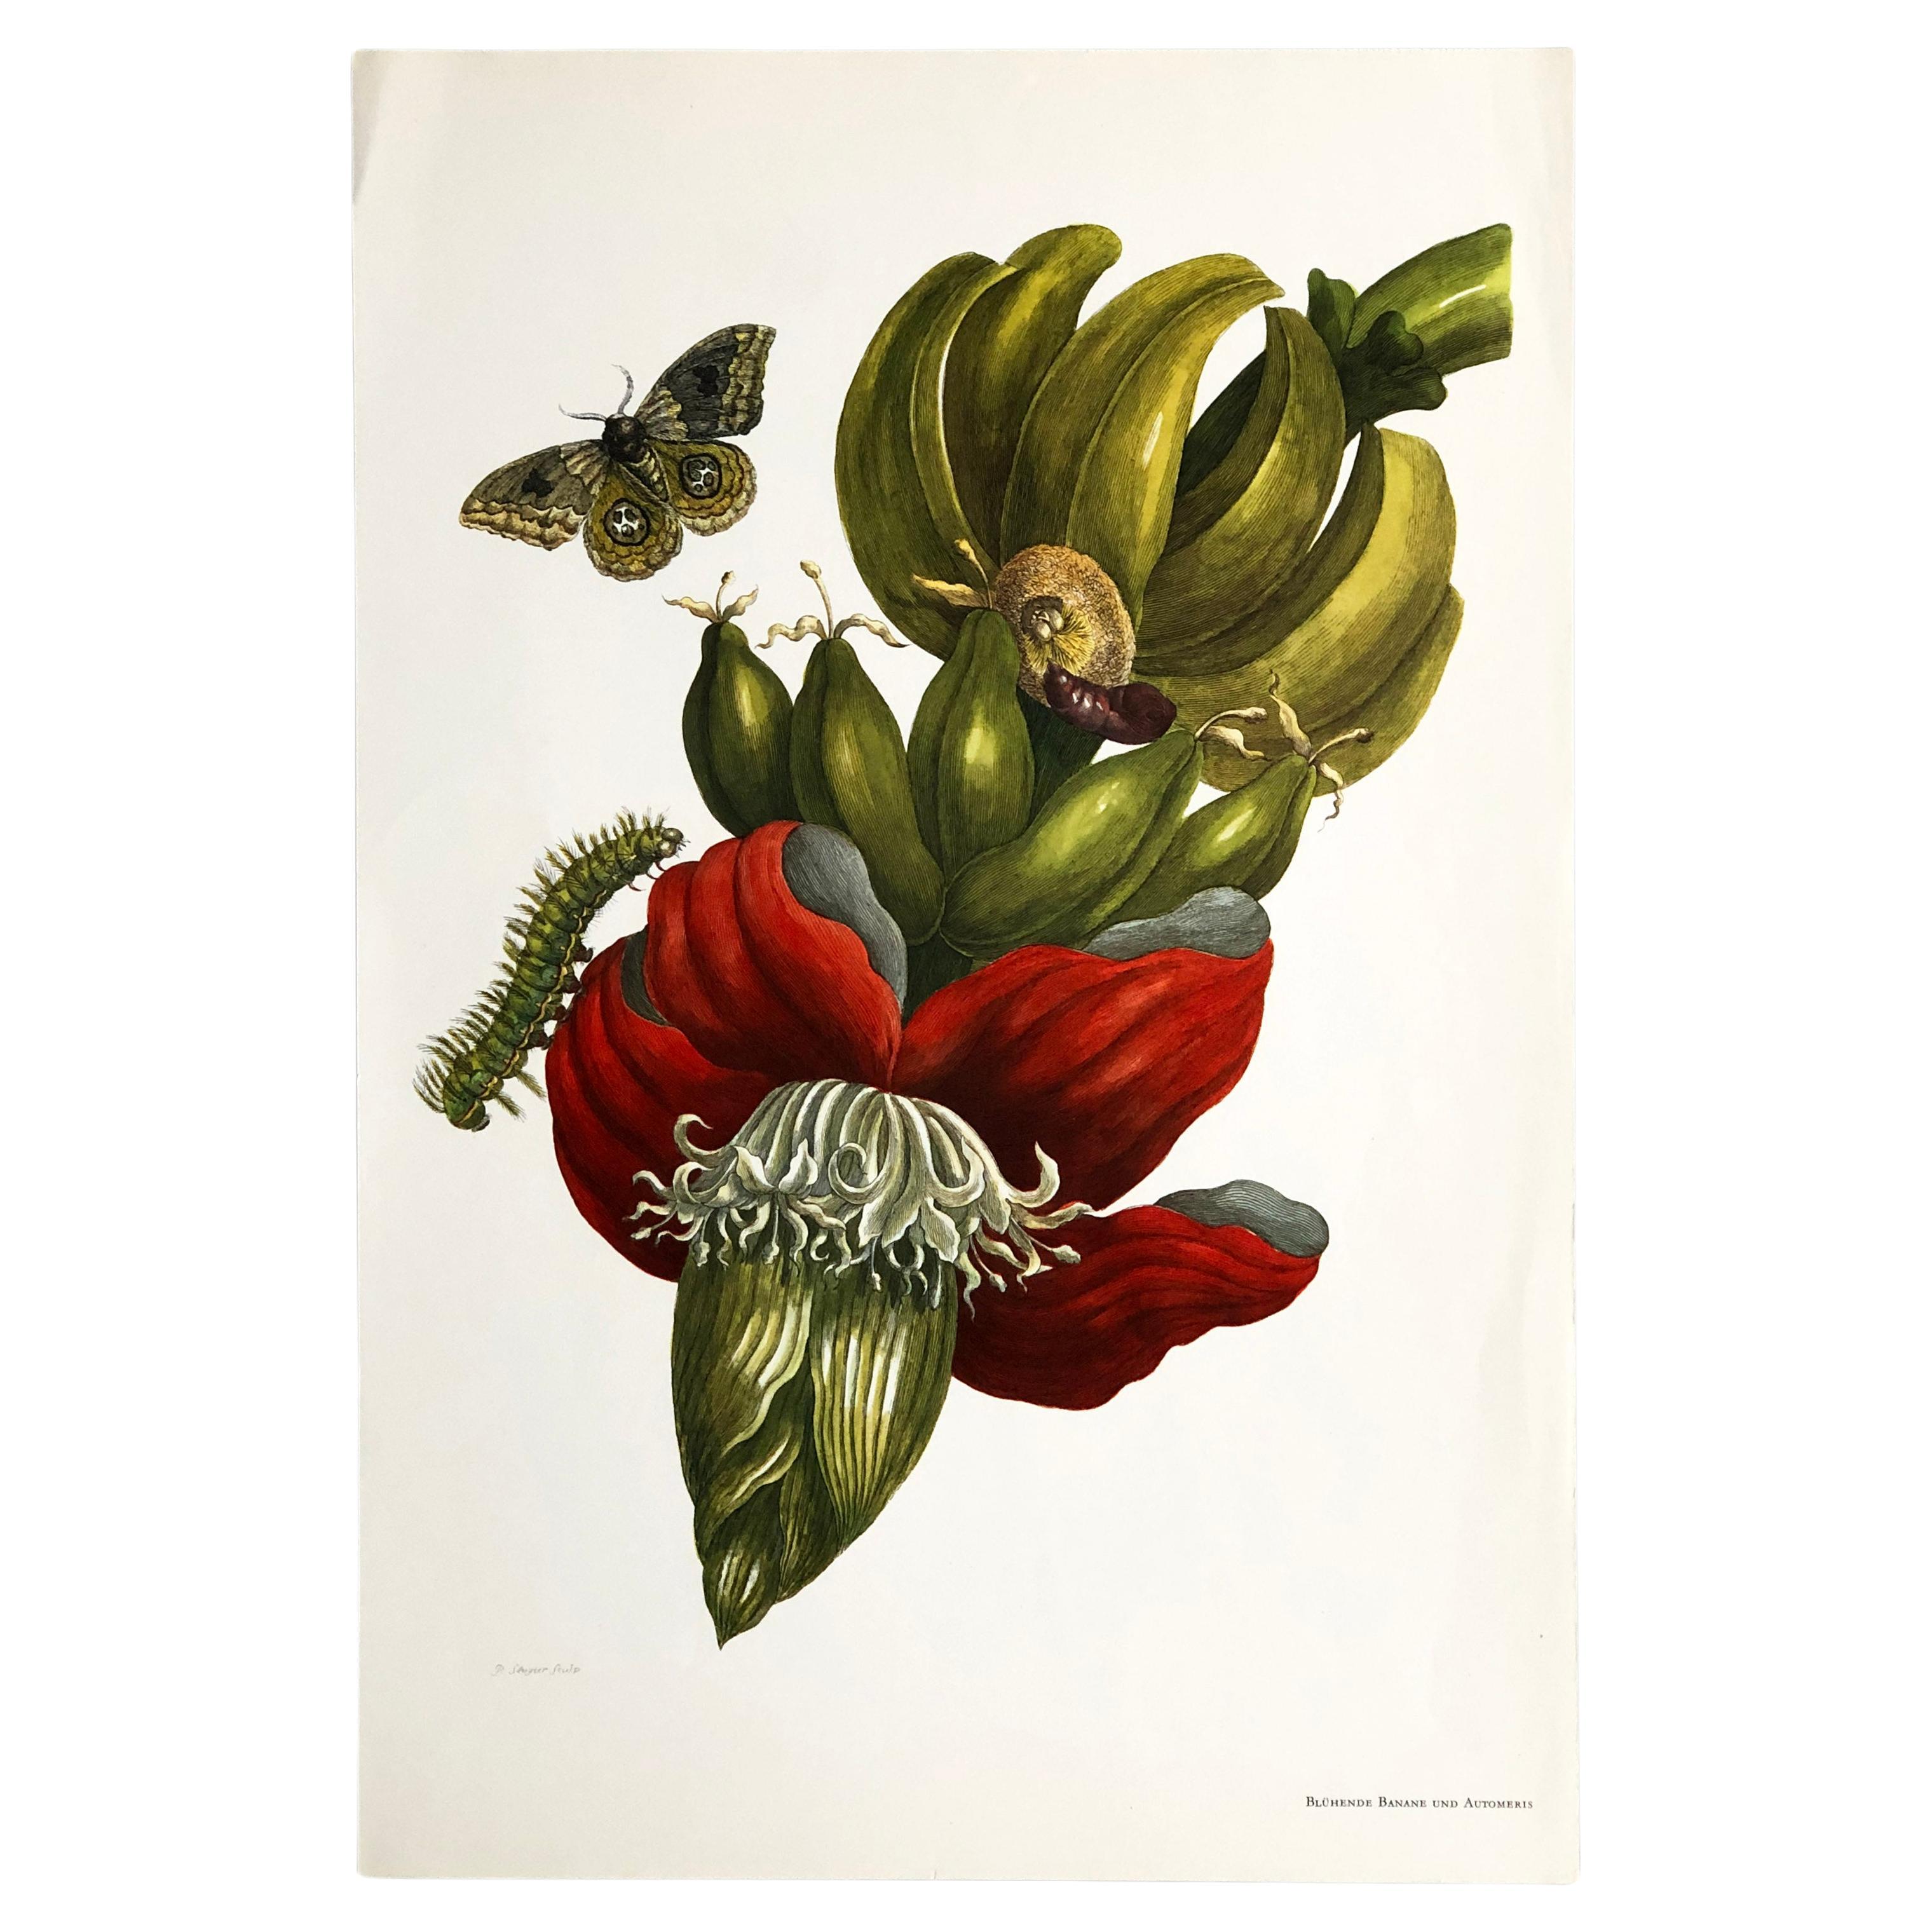 Maria Sibylla Merian - P. Sluyter - Flowering Banana and Automeris Nr. 12 For Sale